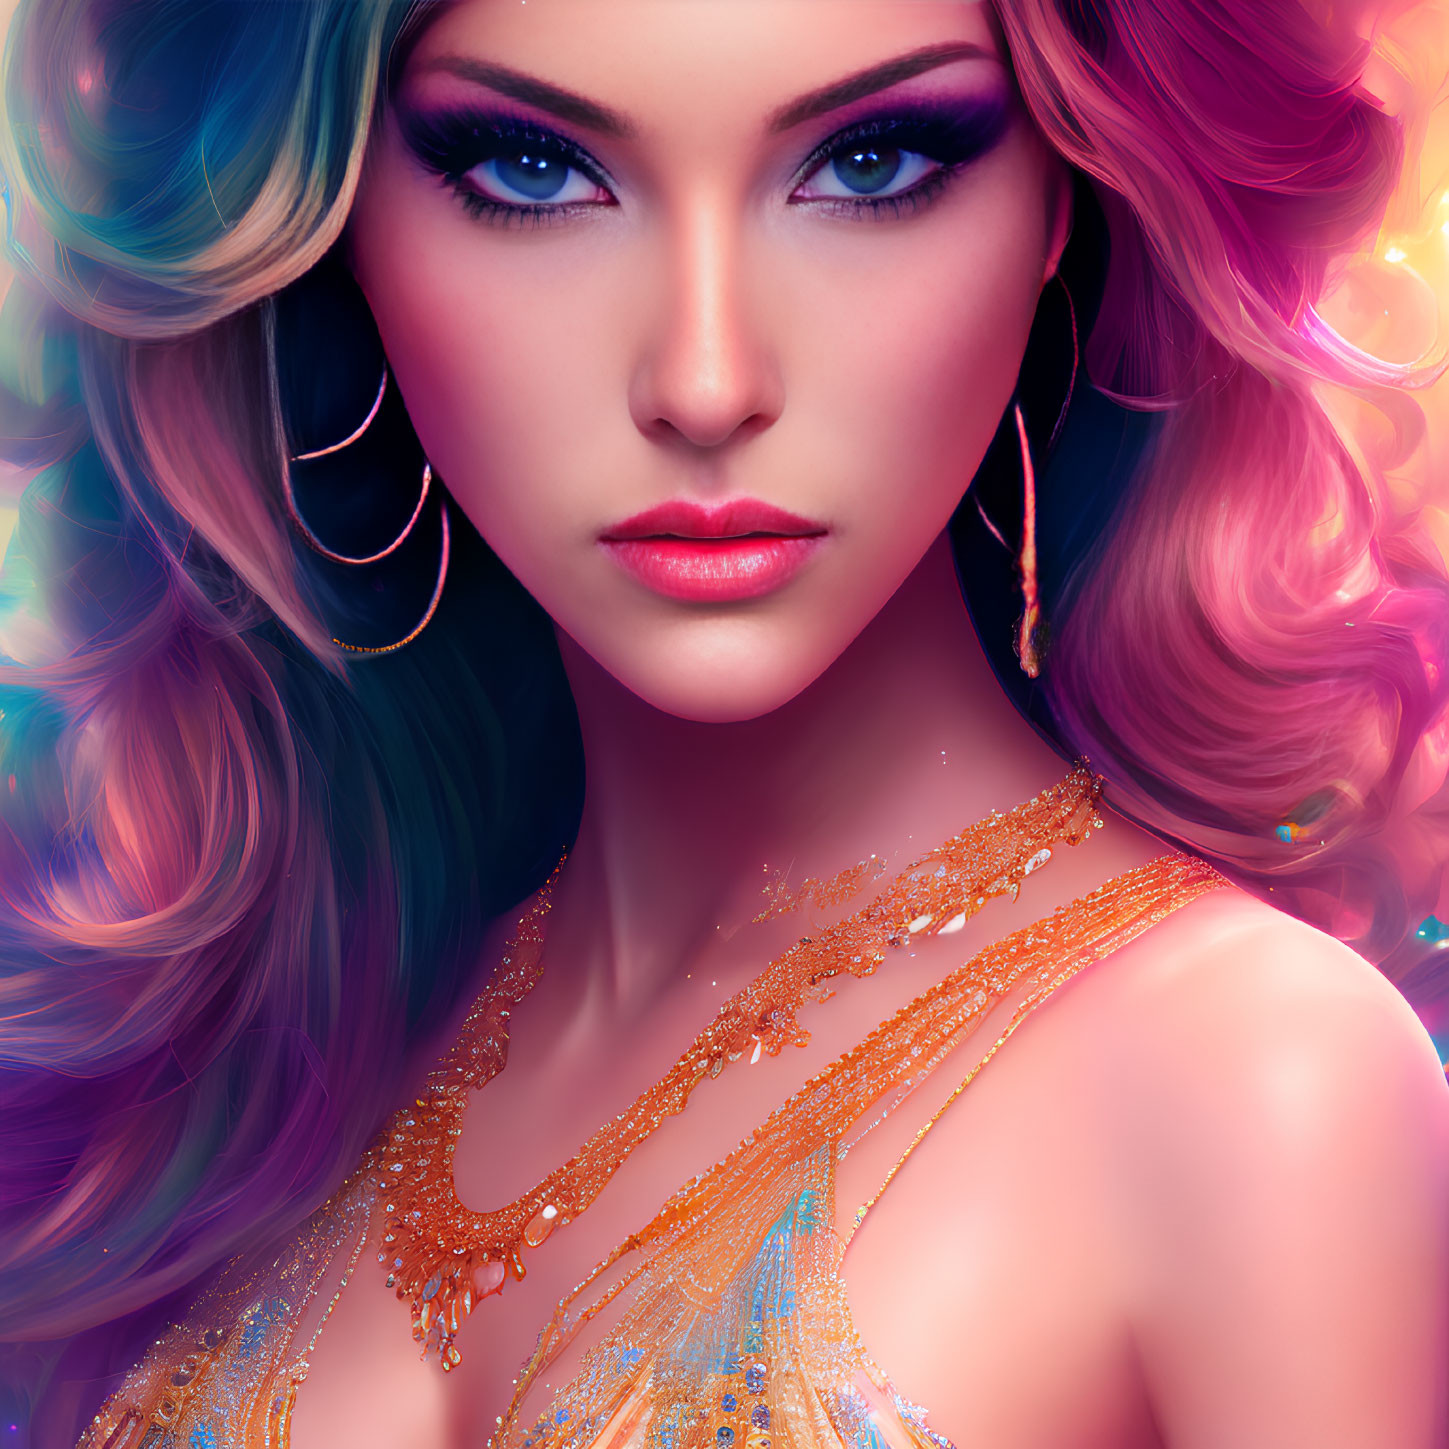 Digital artwork: Woman with purple eyes, golden earrings, shimmering attire, colorful backdrop